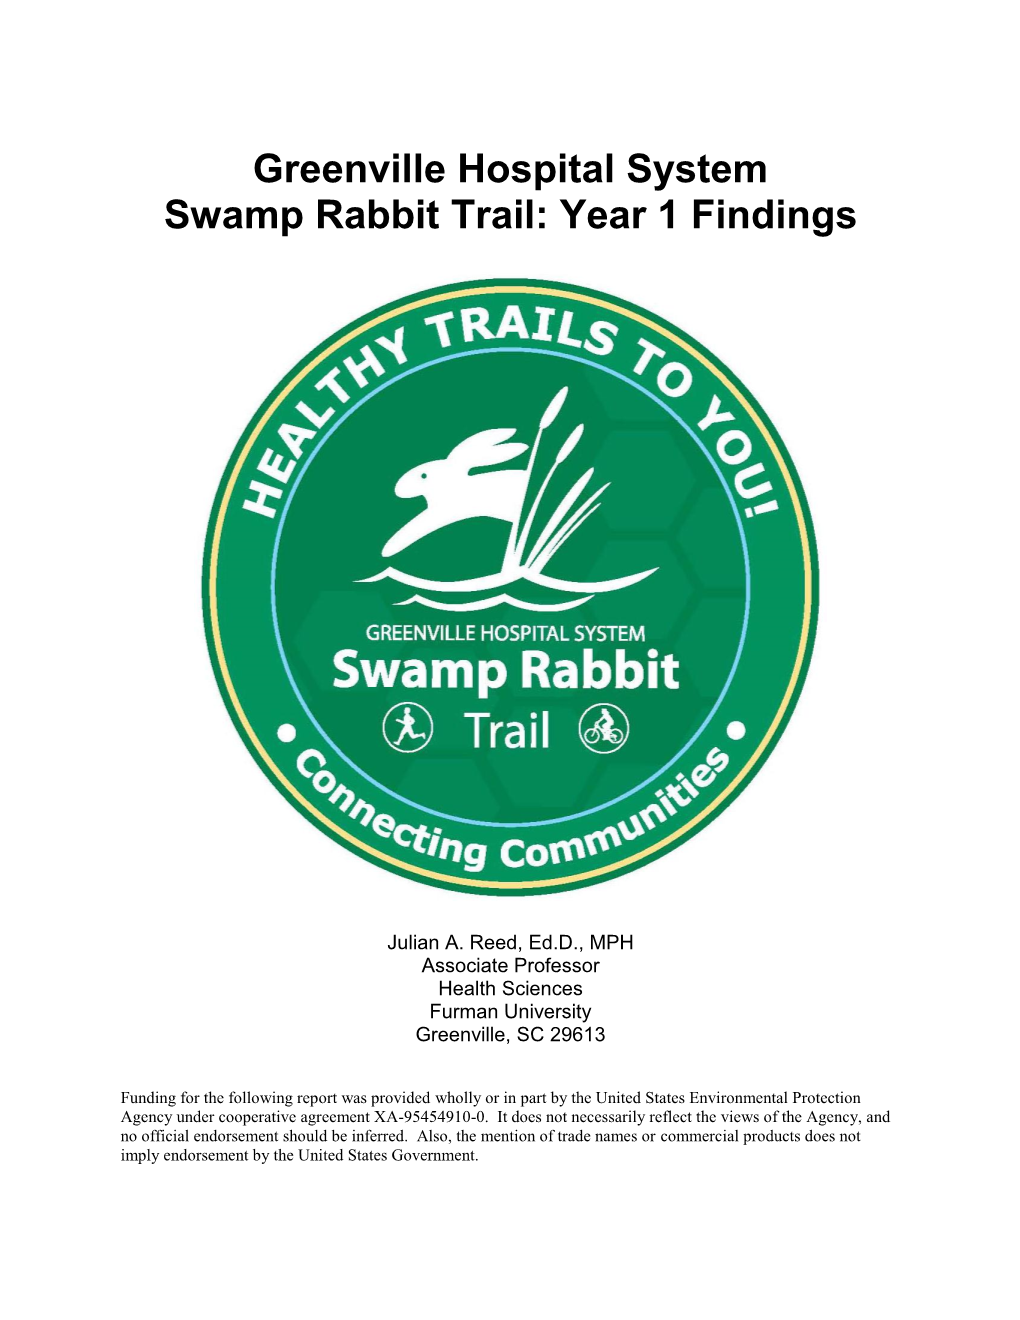 Swamp Rabbit Trail Impact Study